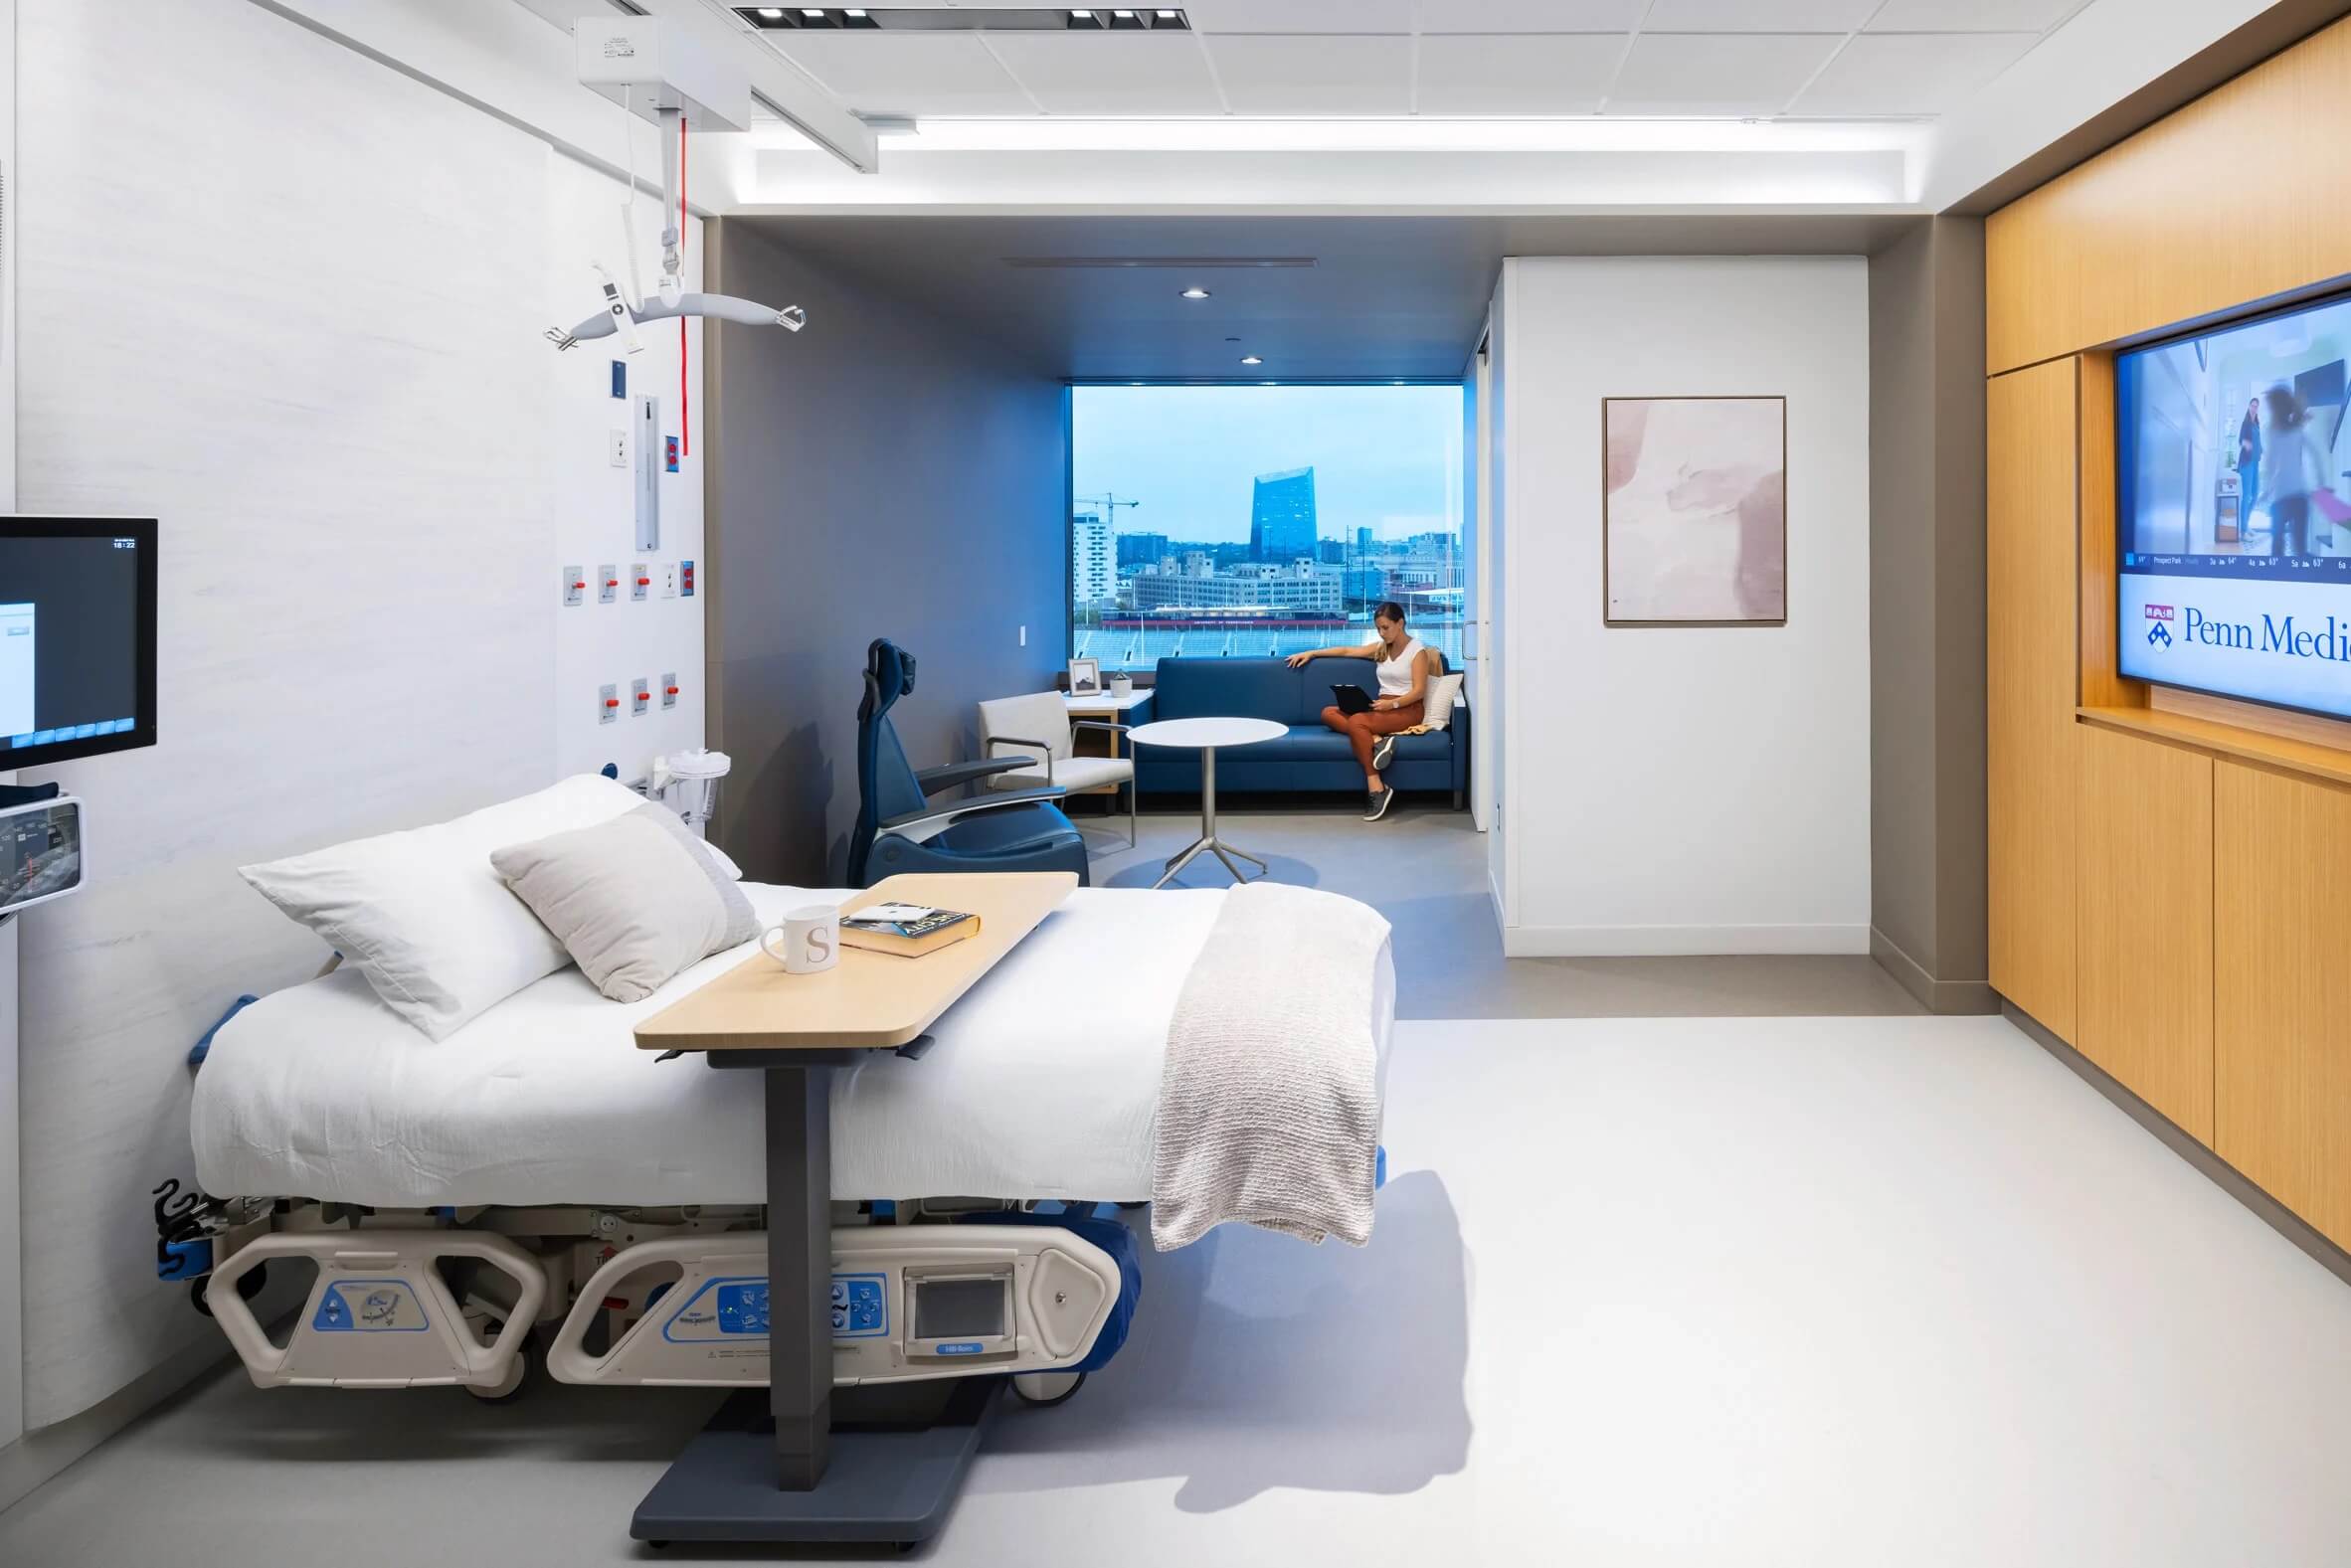 a spacious hospital room with city views